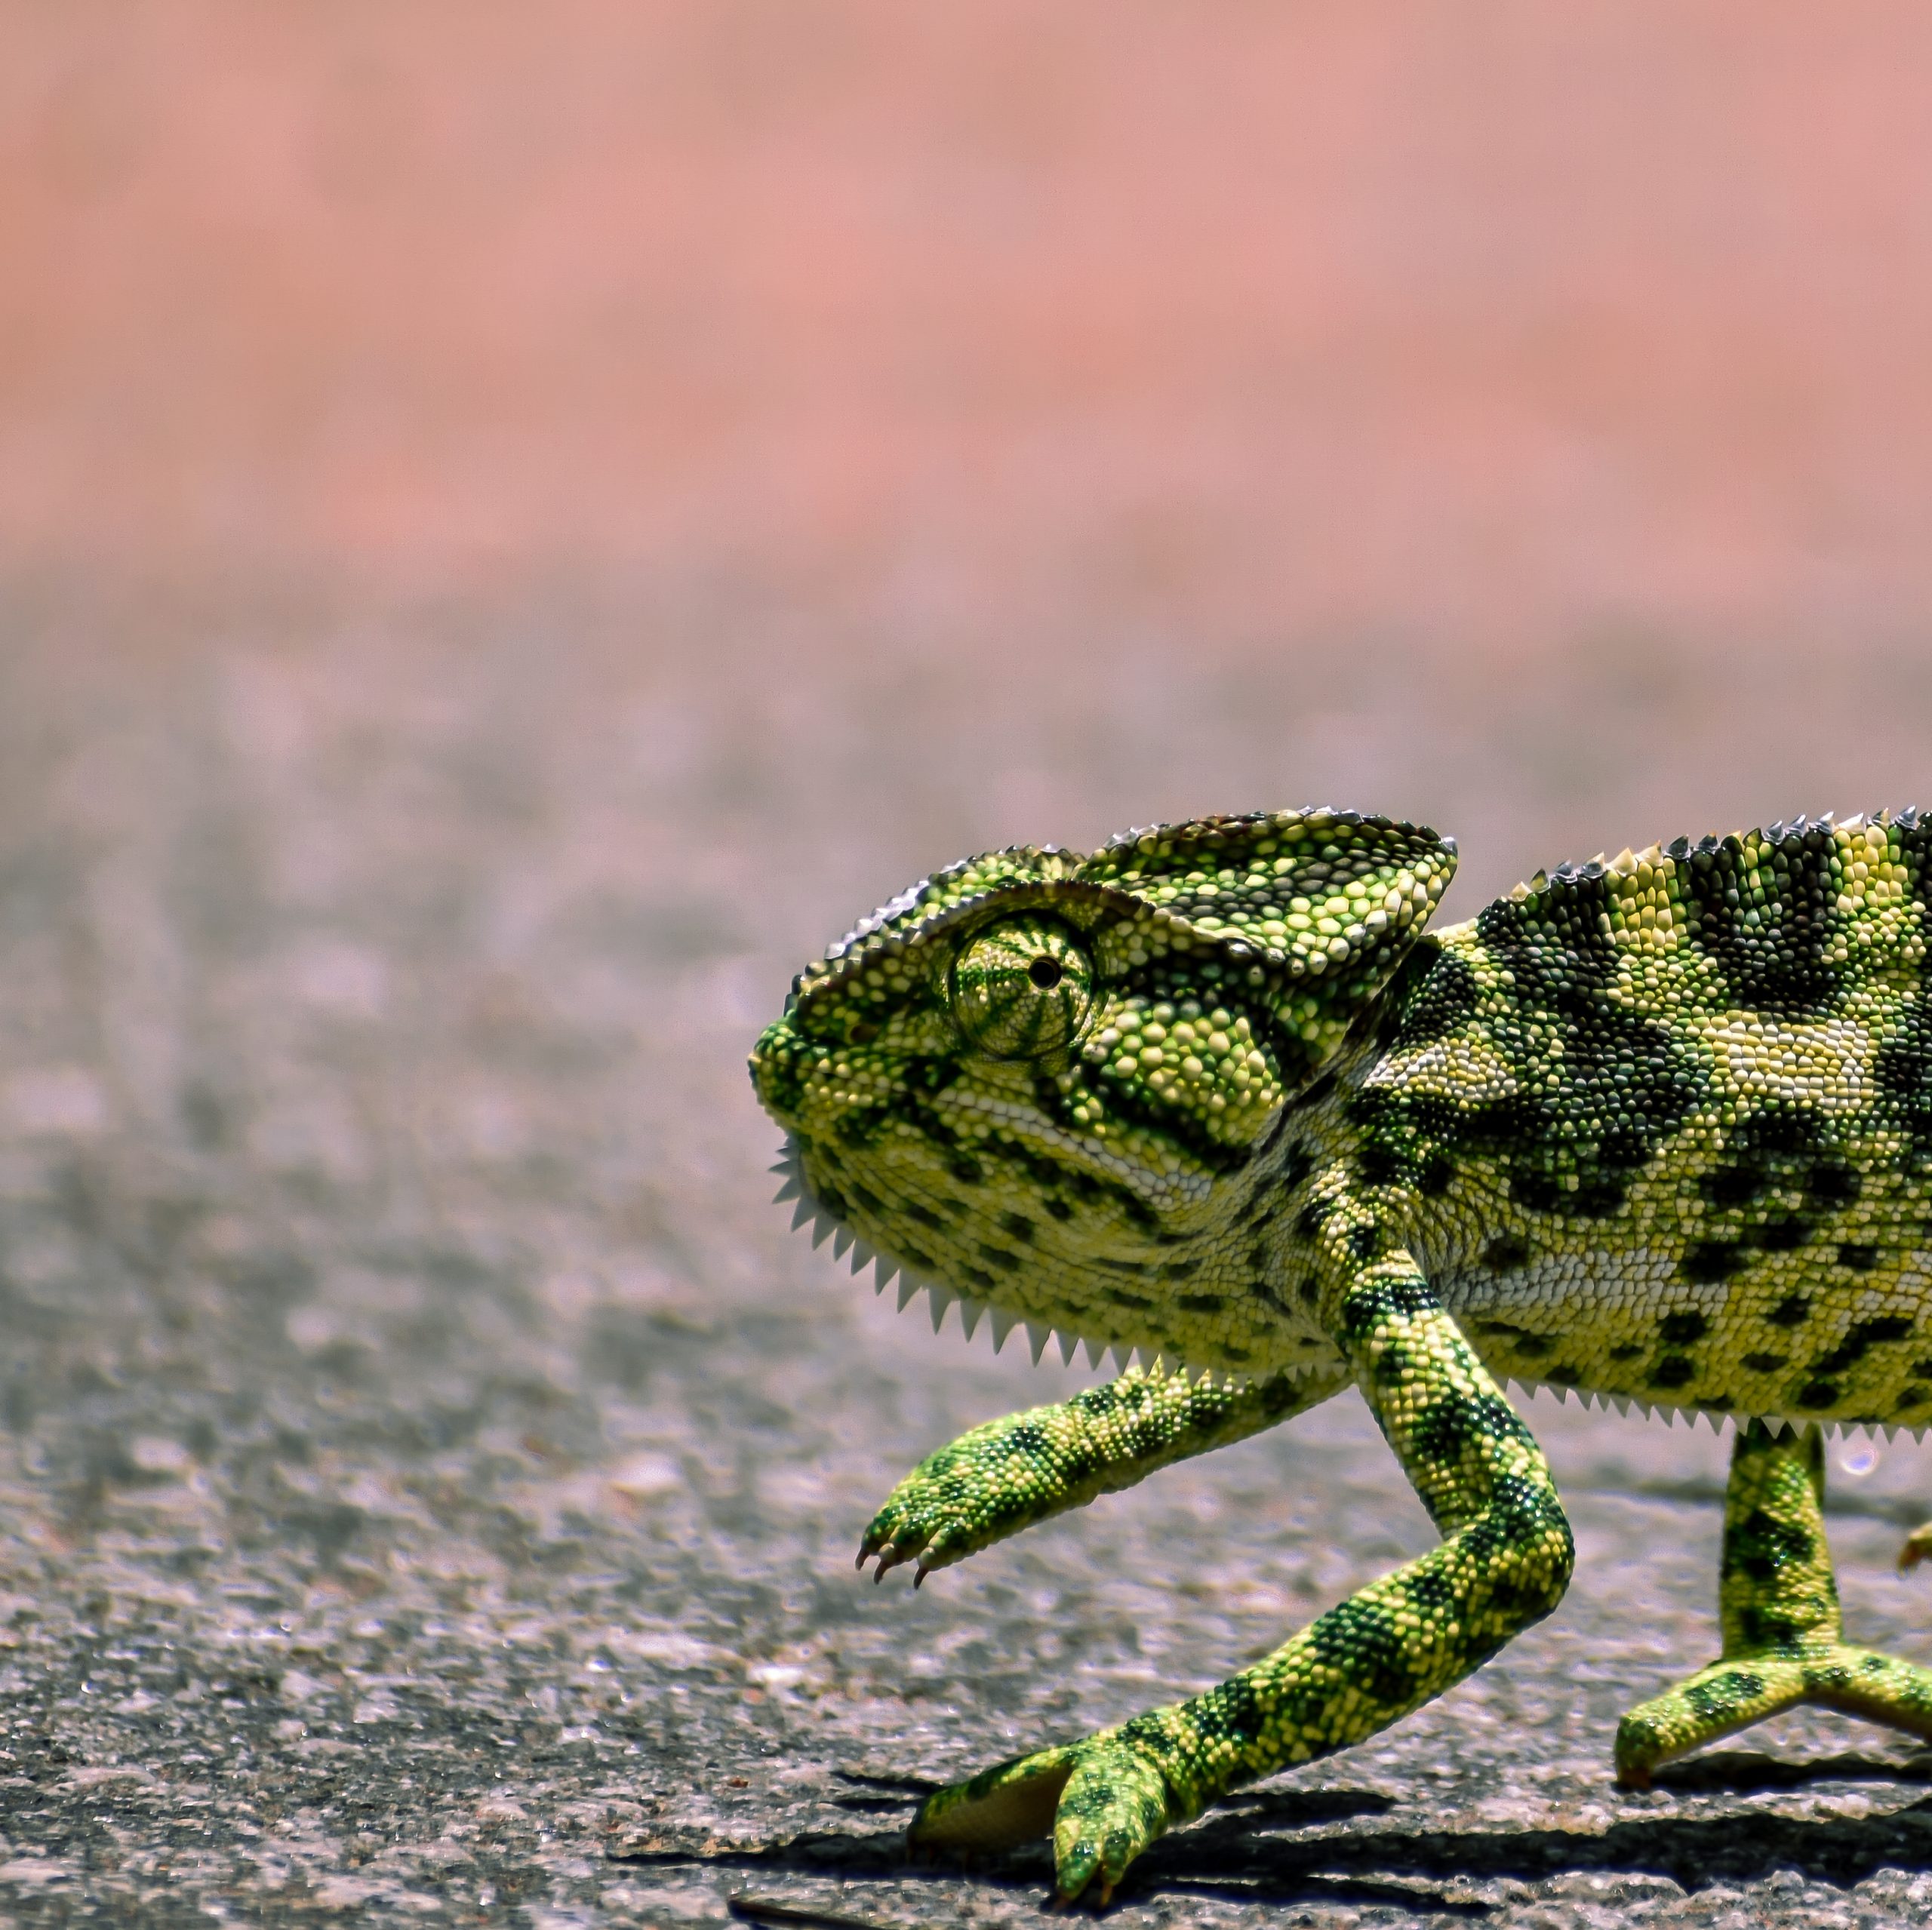 Chameleon on flat surface